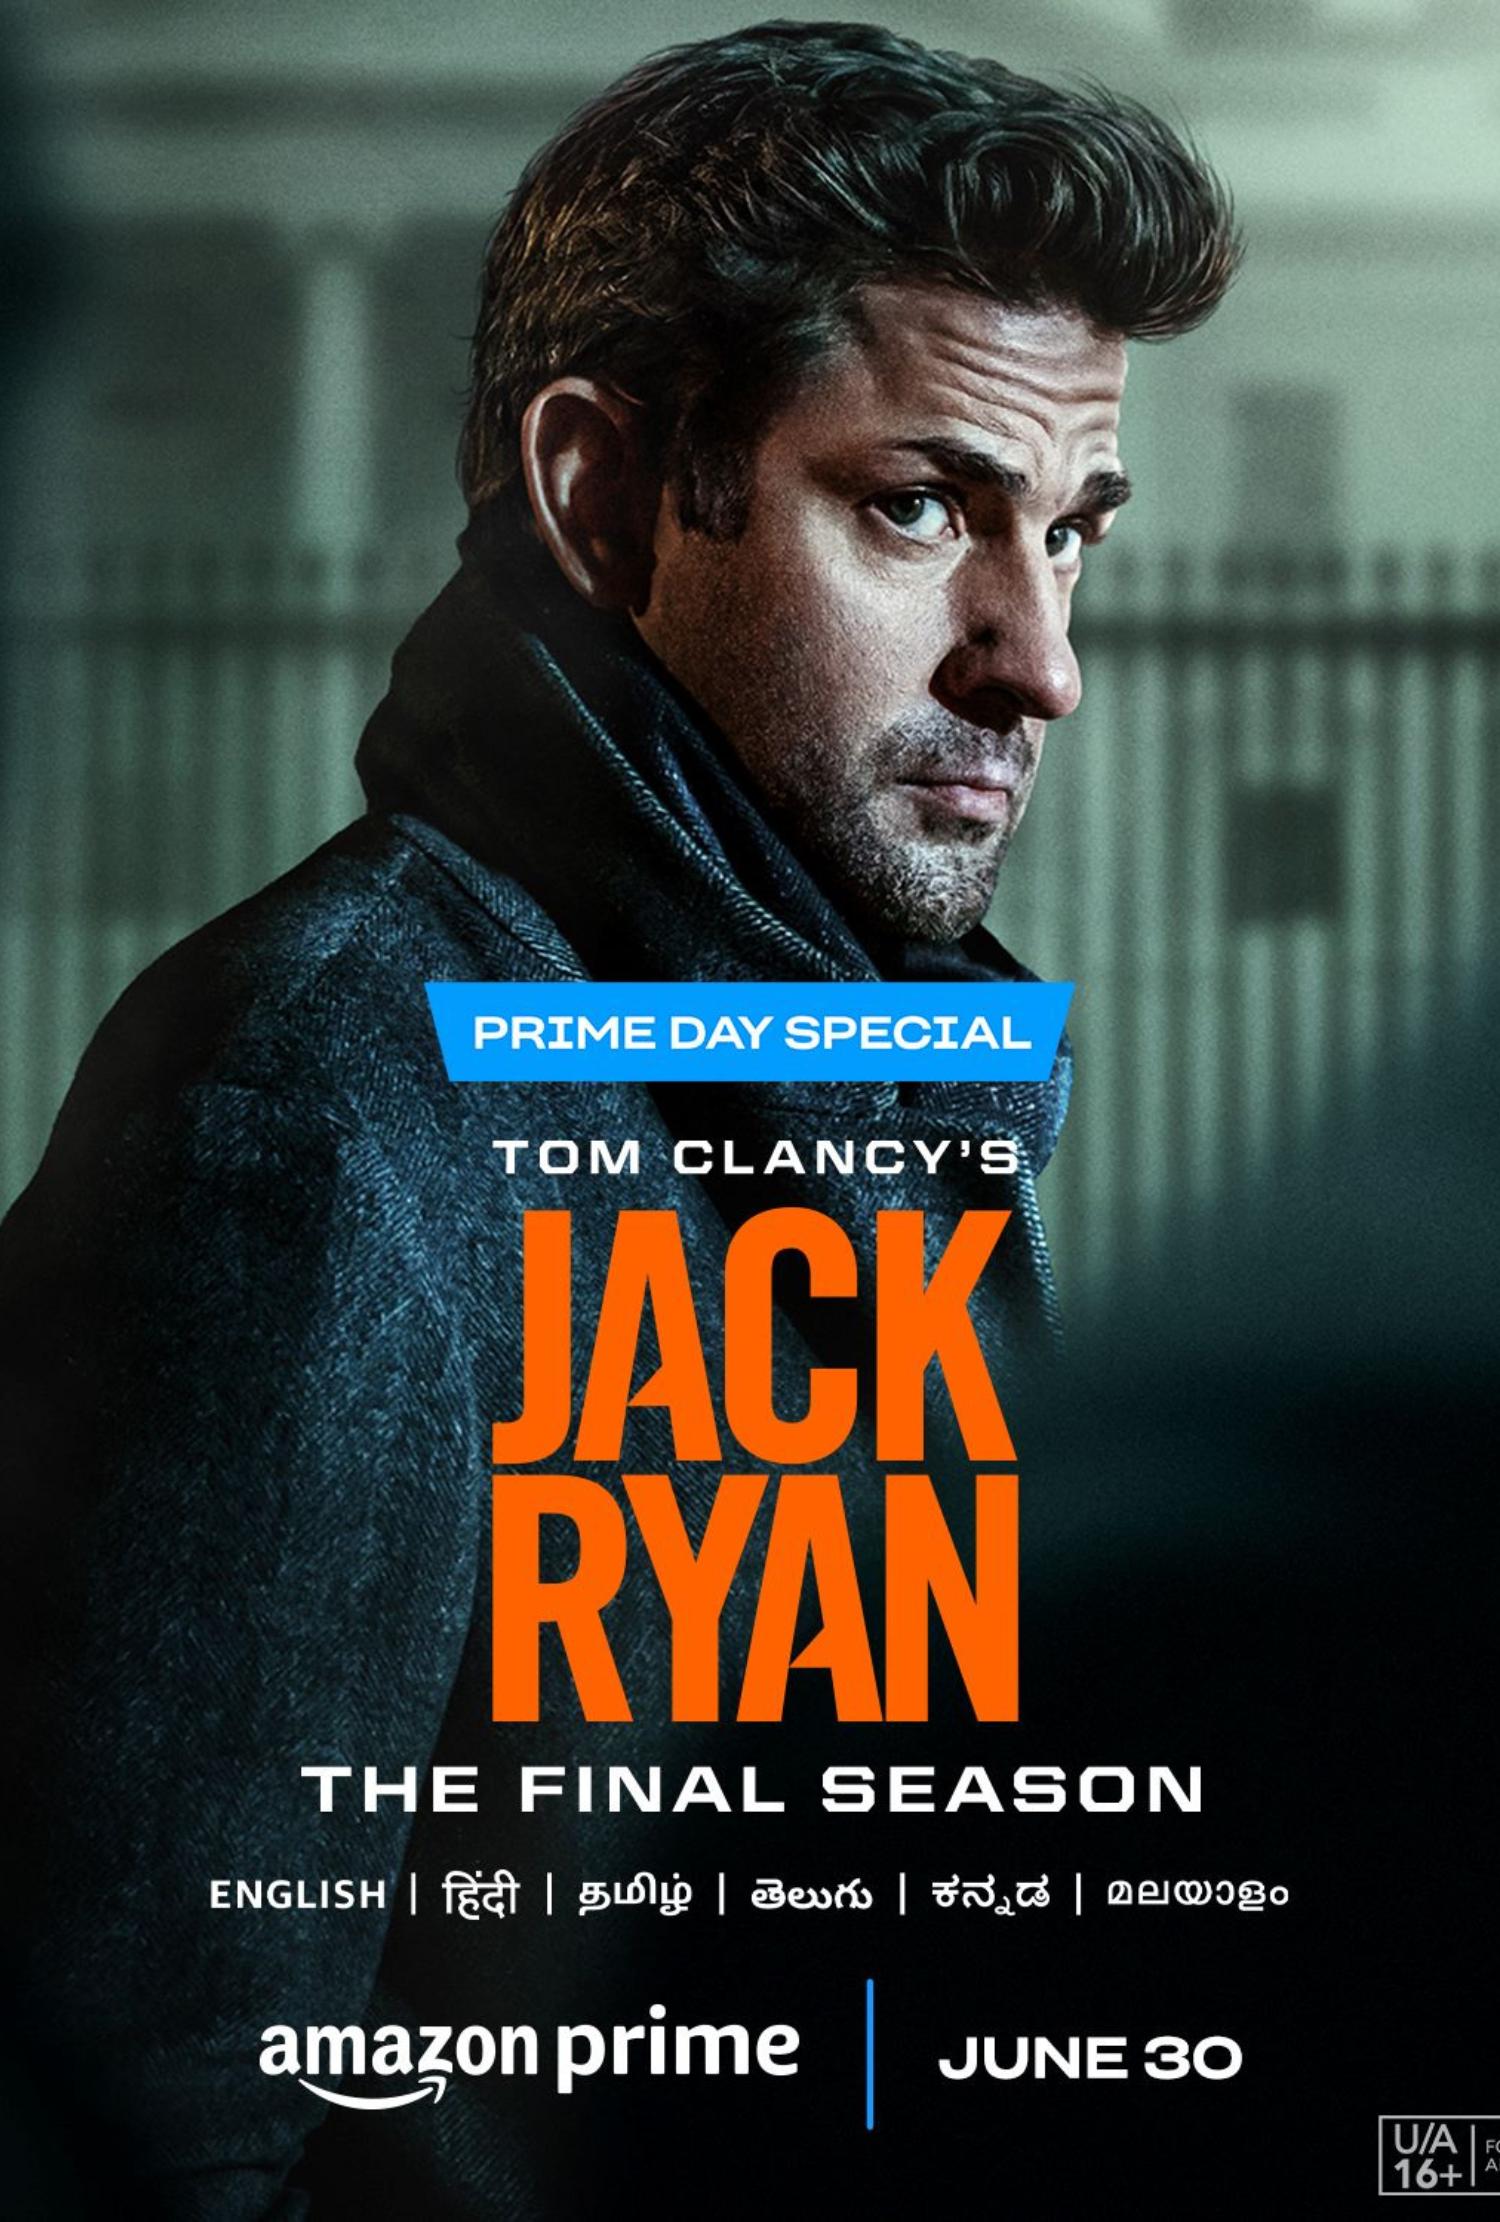 Tom Clancy’s Jack Ryan Season 4 (June 30)- The highly anticipated final season of 